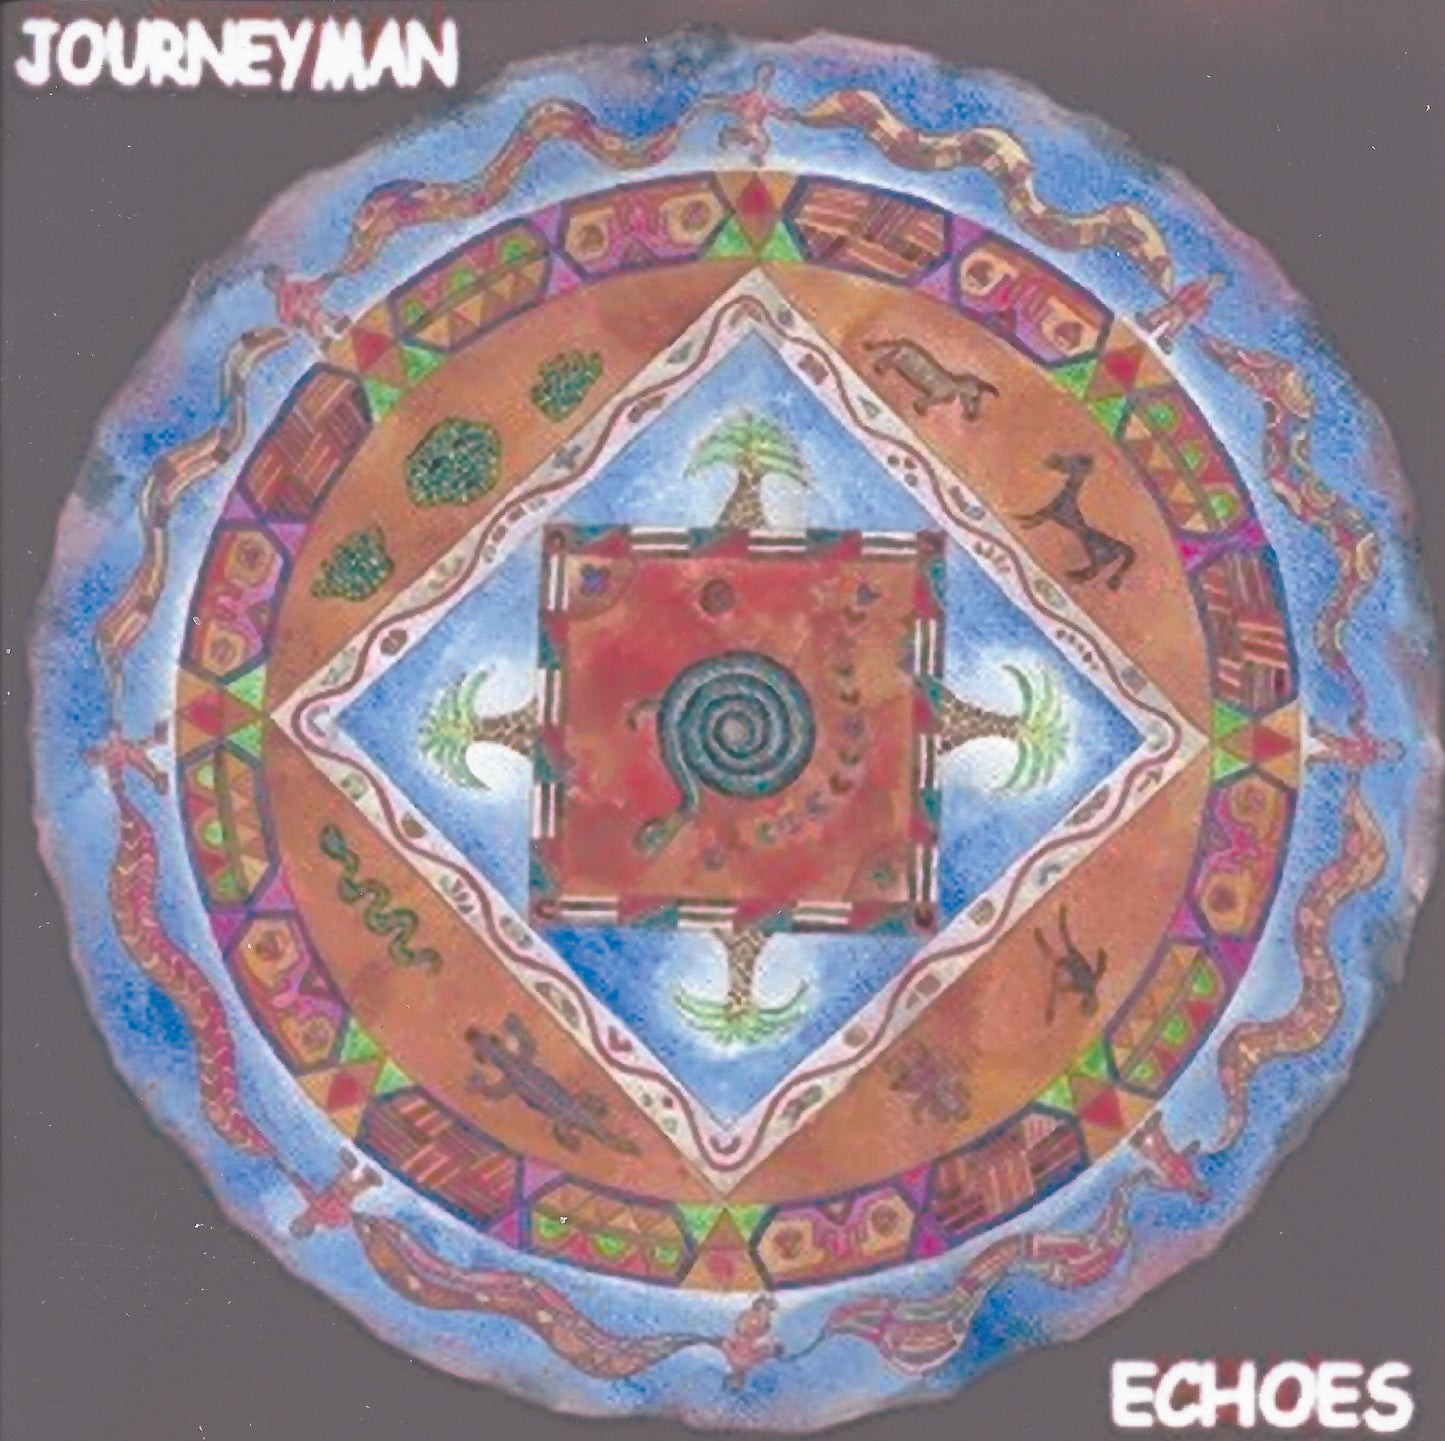 Journeyman - Echoes Album